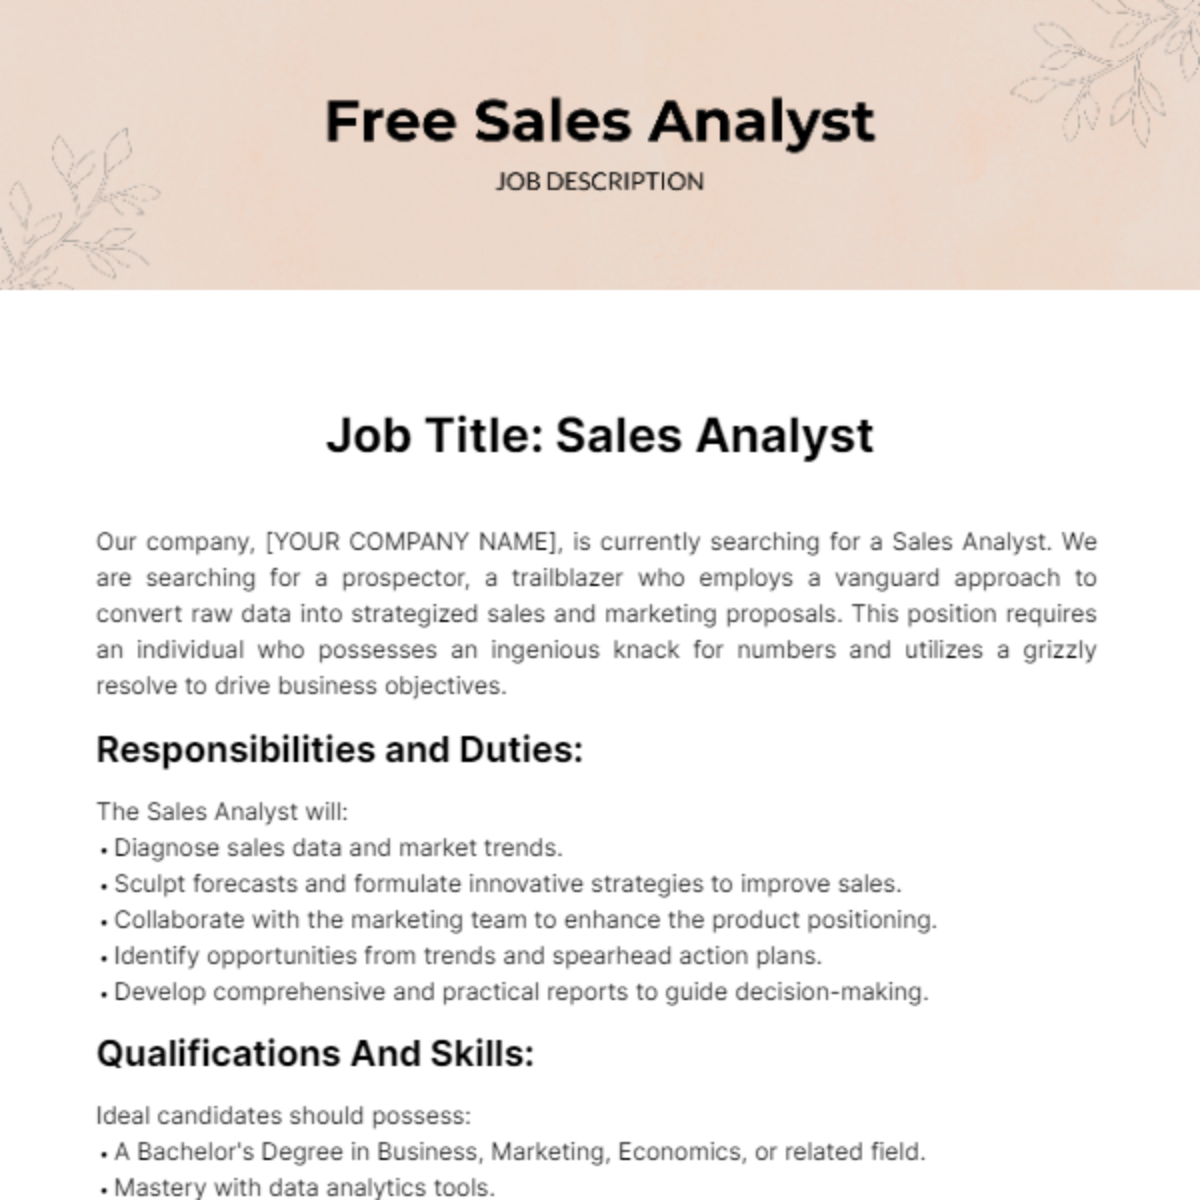 Free Sales Analyst Job Description Template